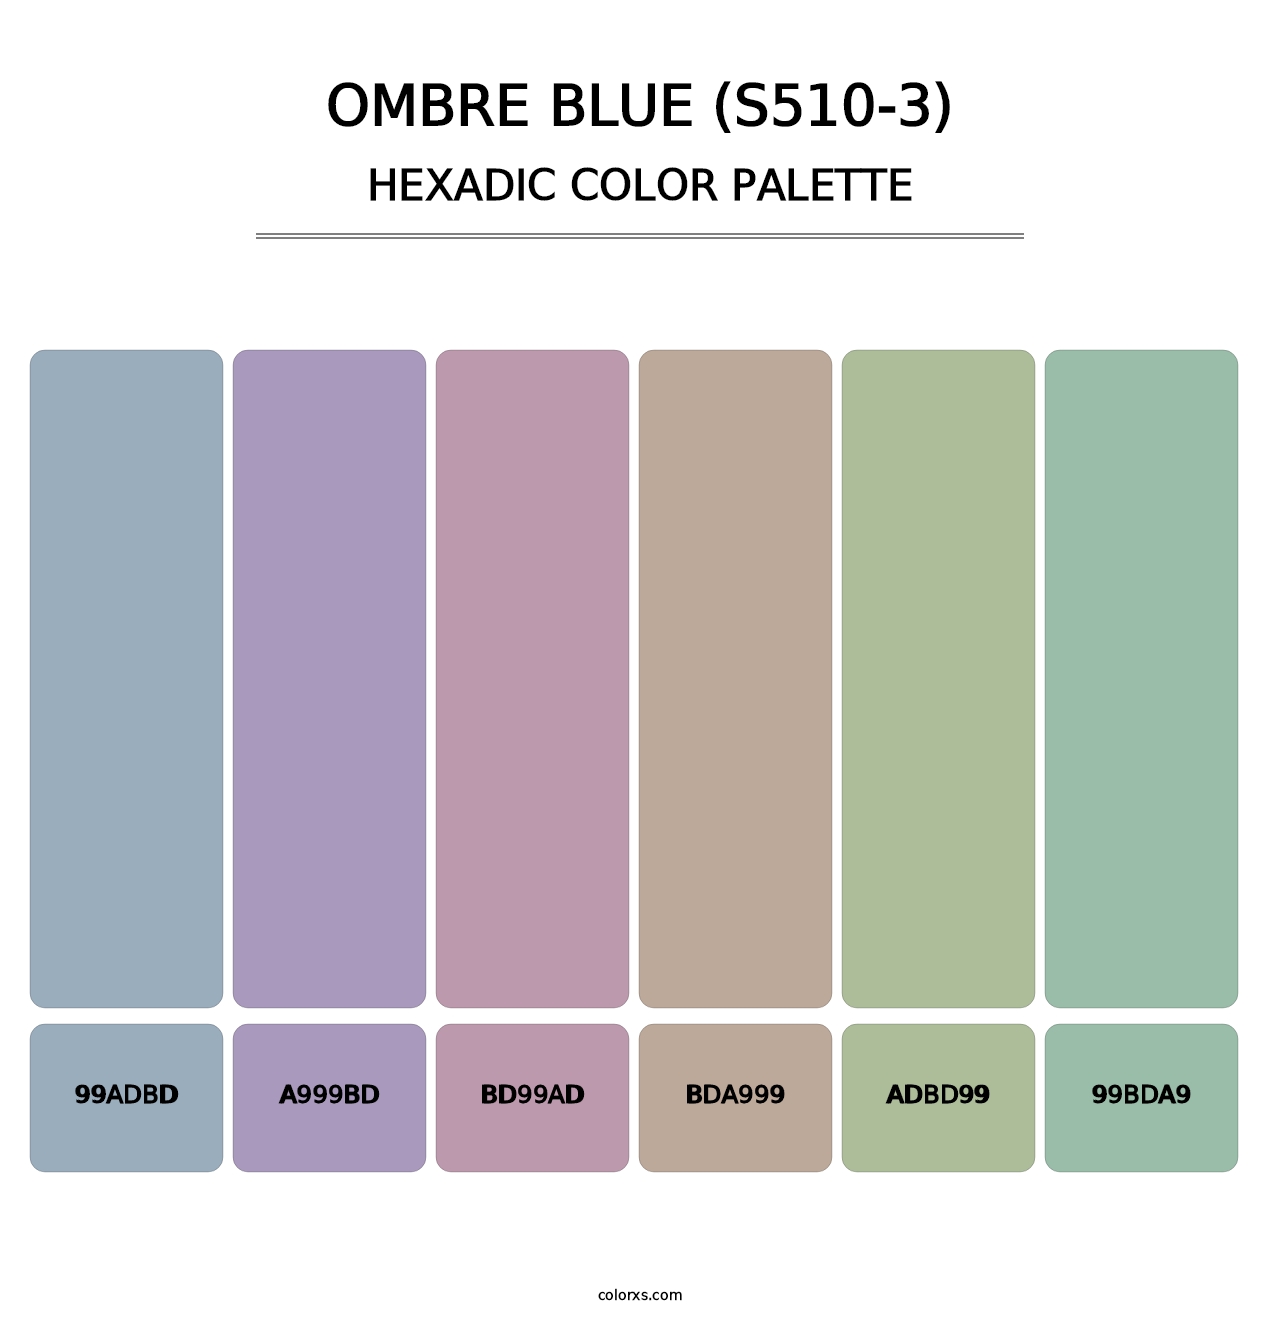 Ombre Blue (S510-3) - Hexadic Color Palette